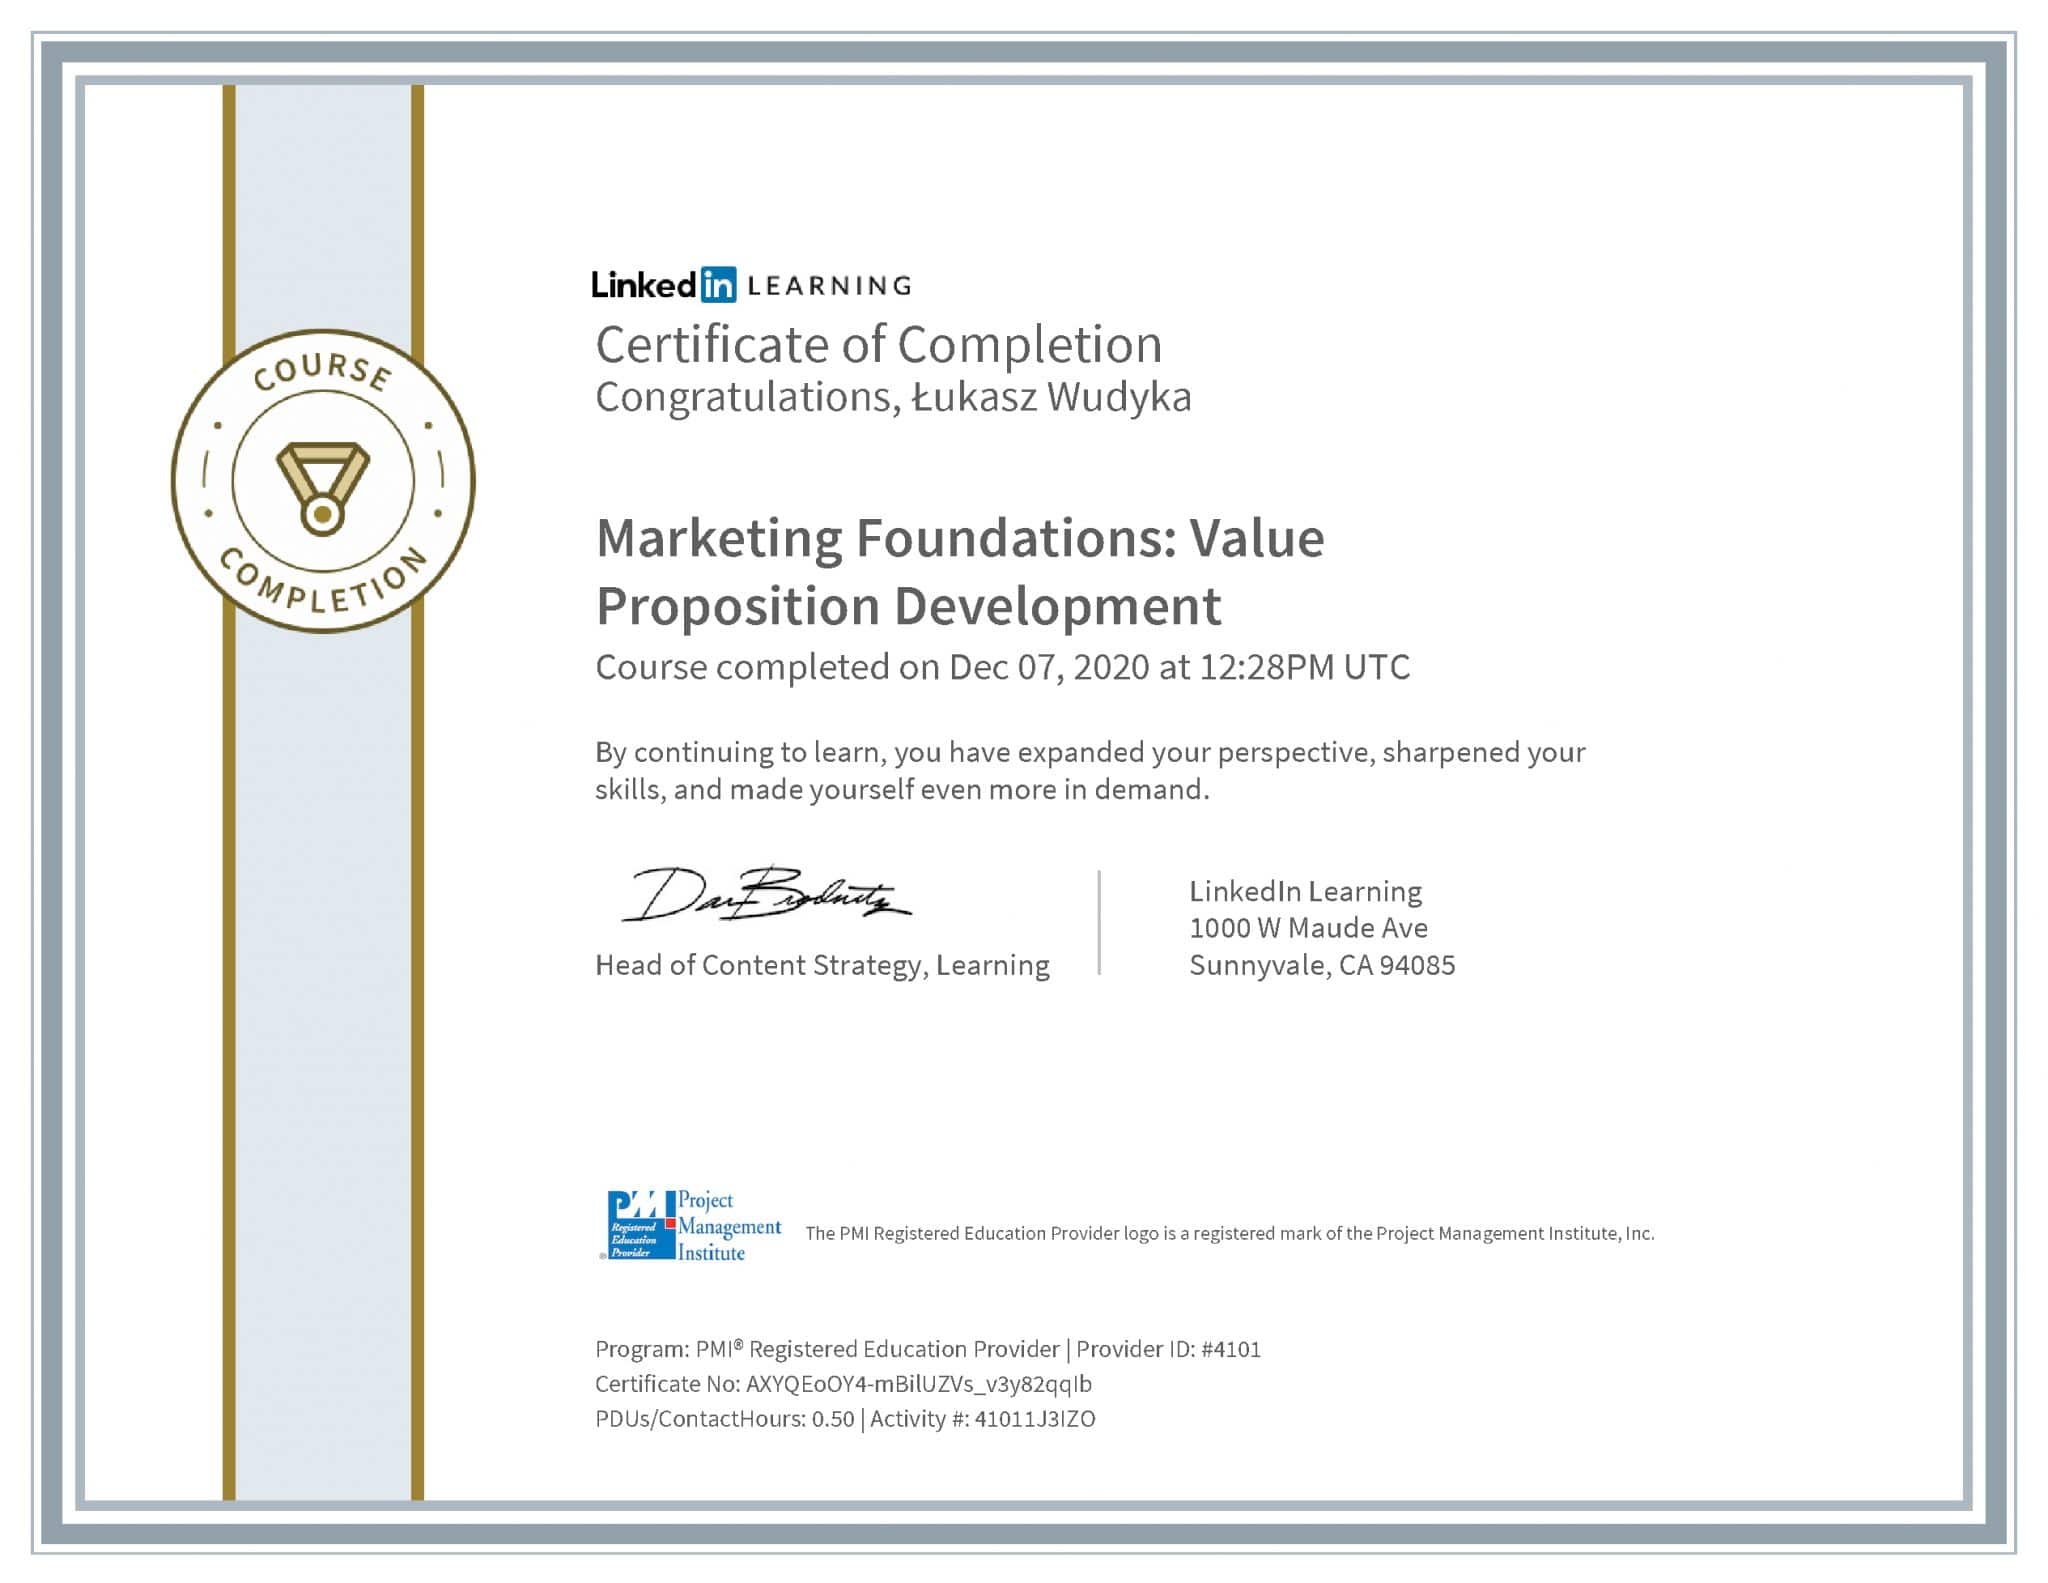 Łukasz Wudyka certyfikat LinkedIn Marketing Foundations: Value Proposition Development PMI